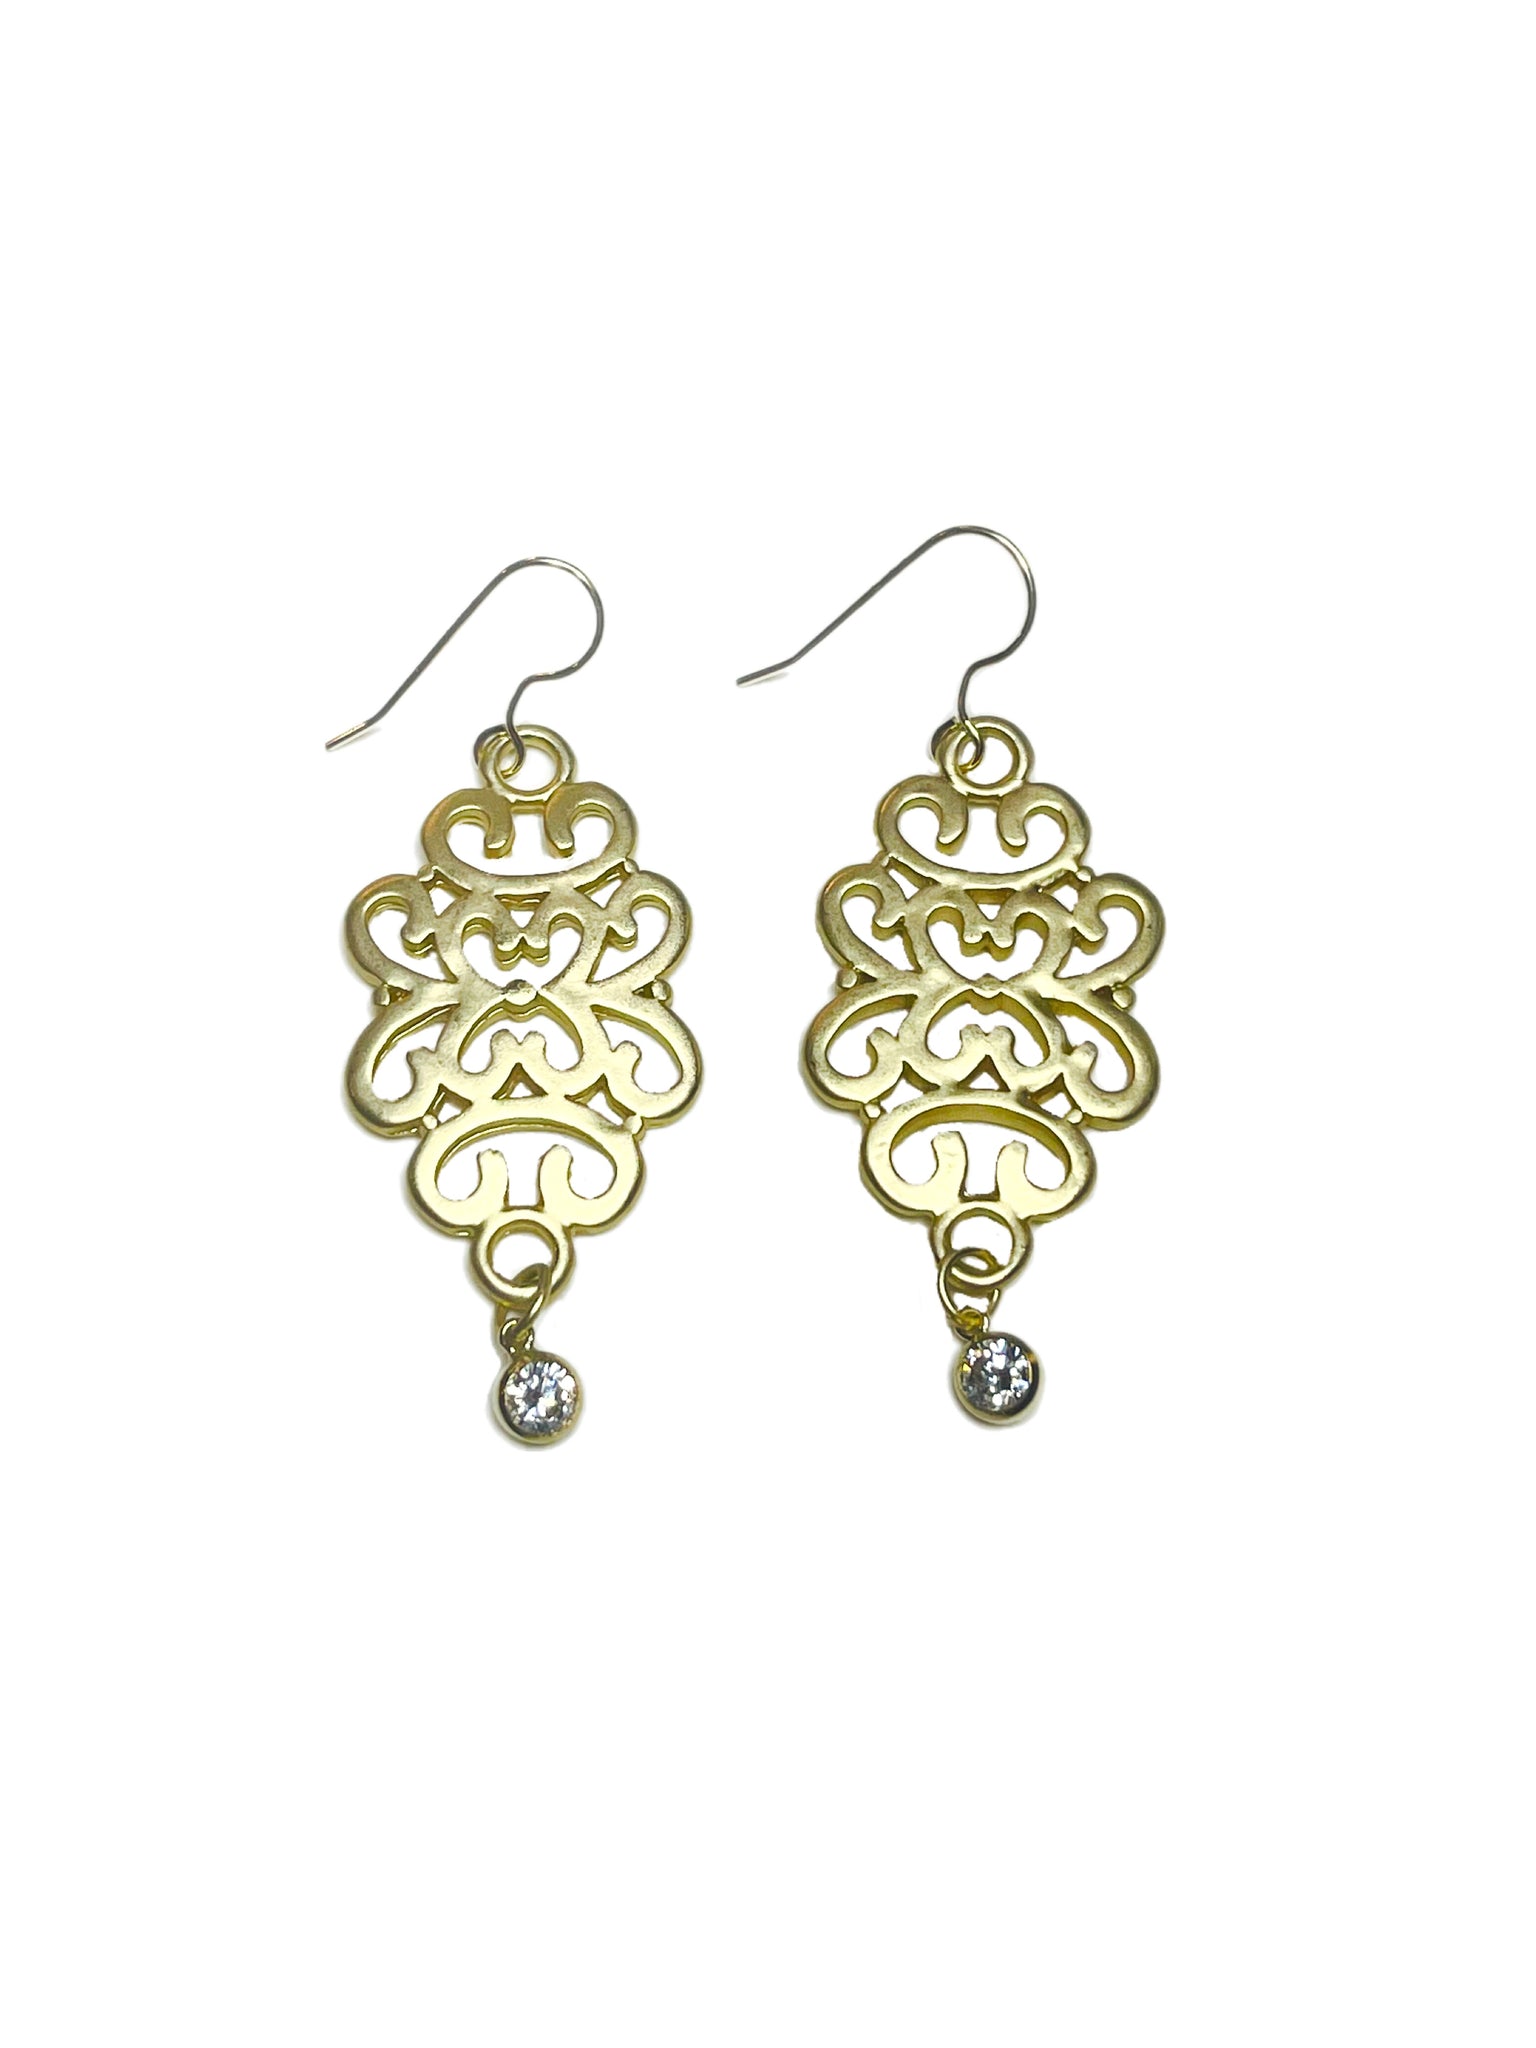 Holly - Filigree matte gold earrings with bezel set cz drops